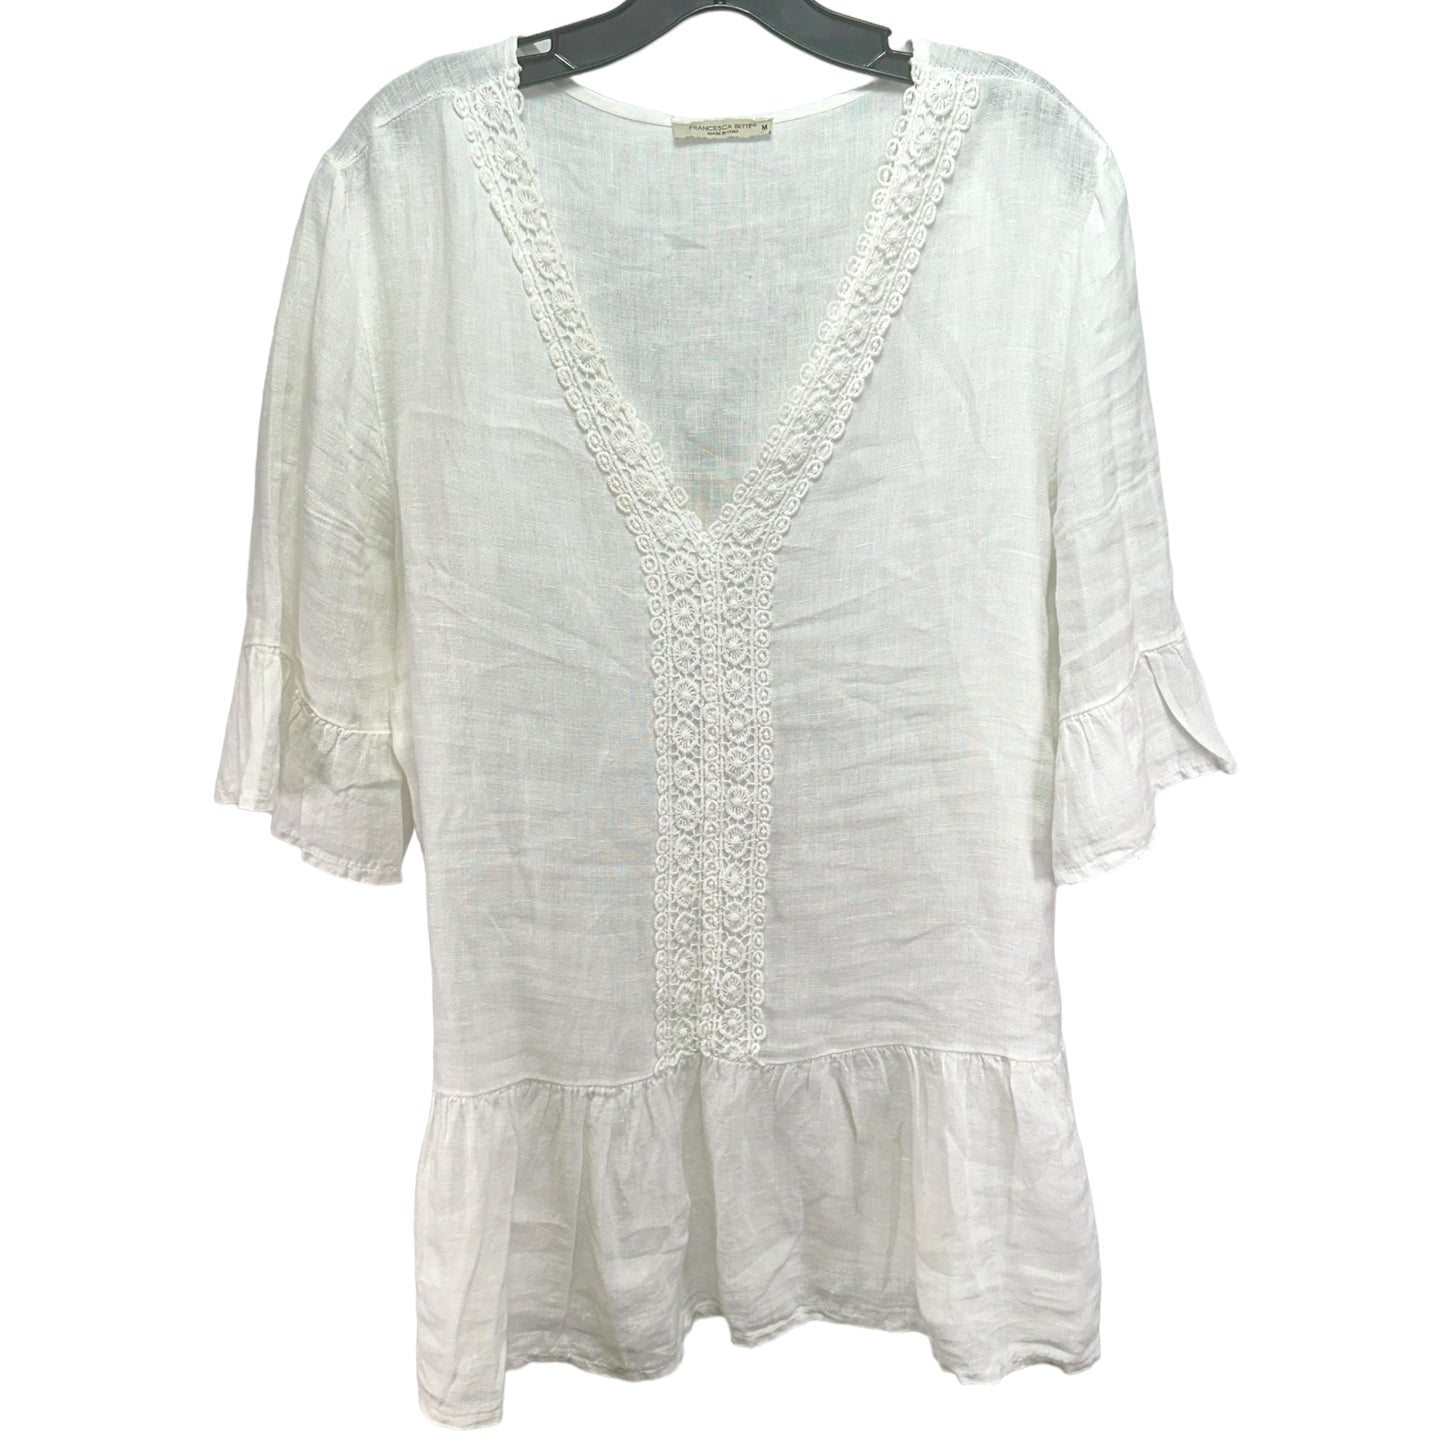 Linen & Crochet Lace Tunic White Top 3/4 Sleeve Francesca Bettini, Size M